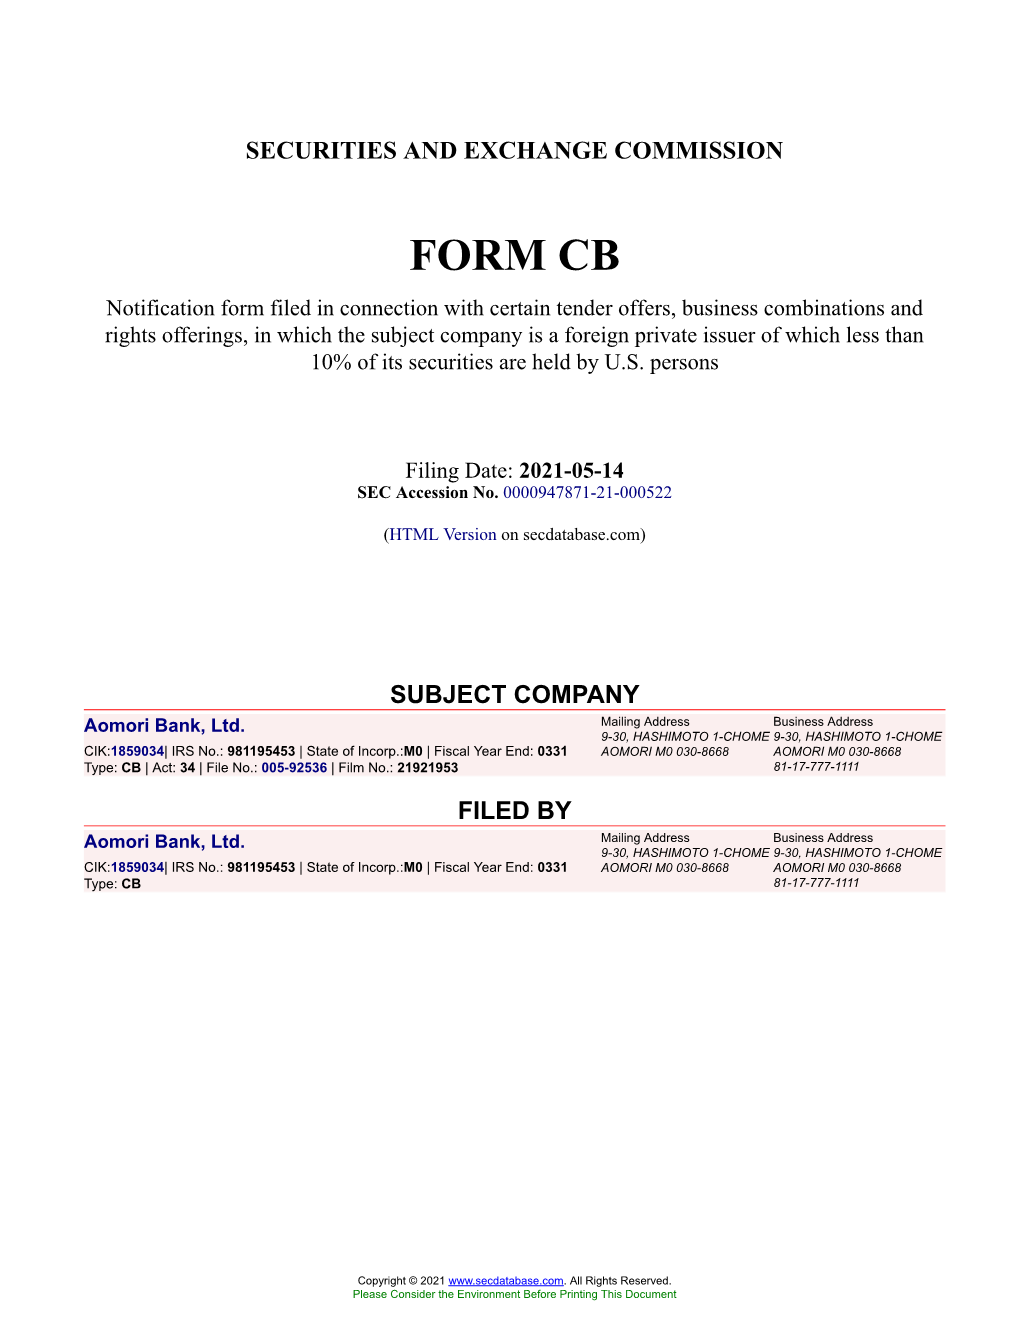 Aomori Bank, Ltd. Form CB Filed 2021-05-14